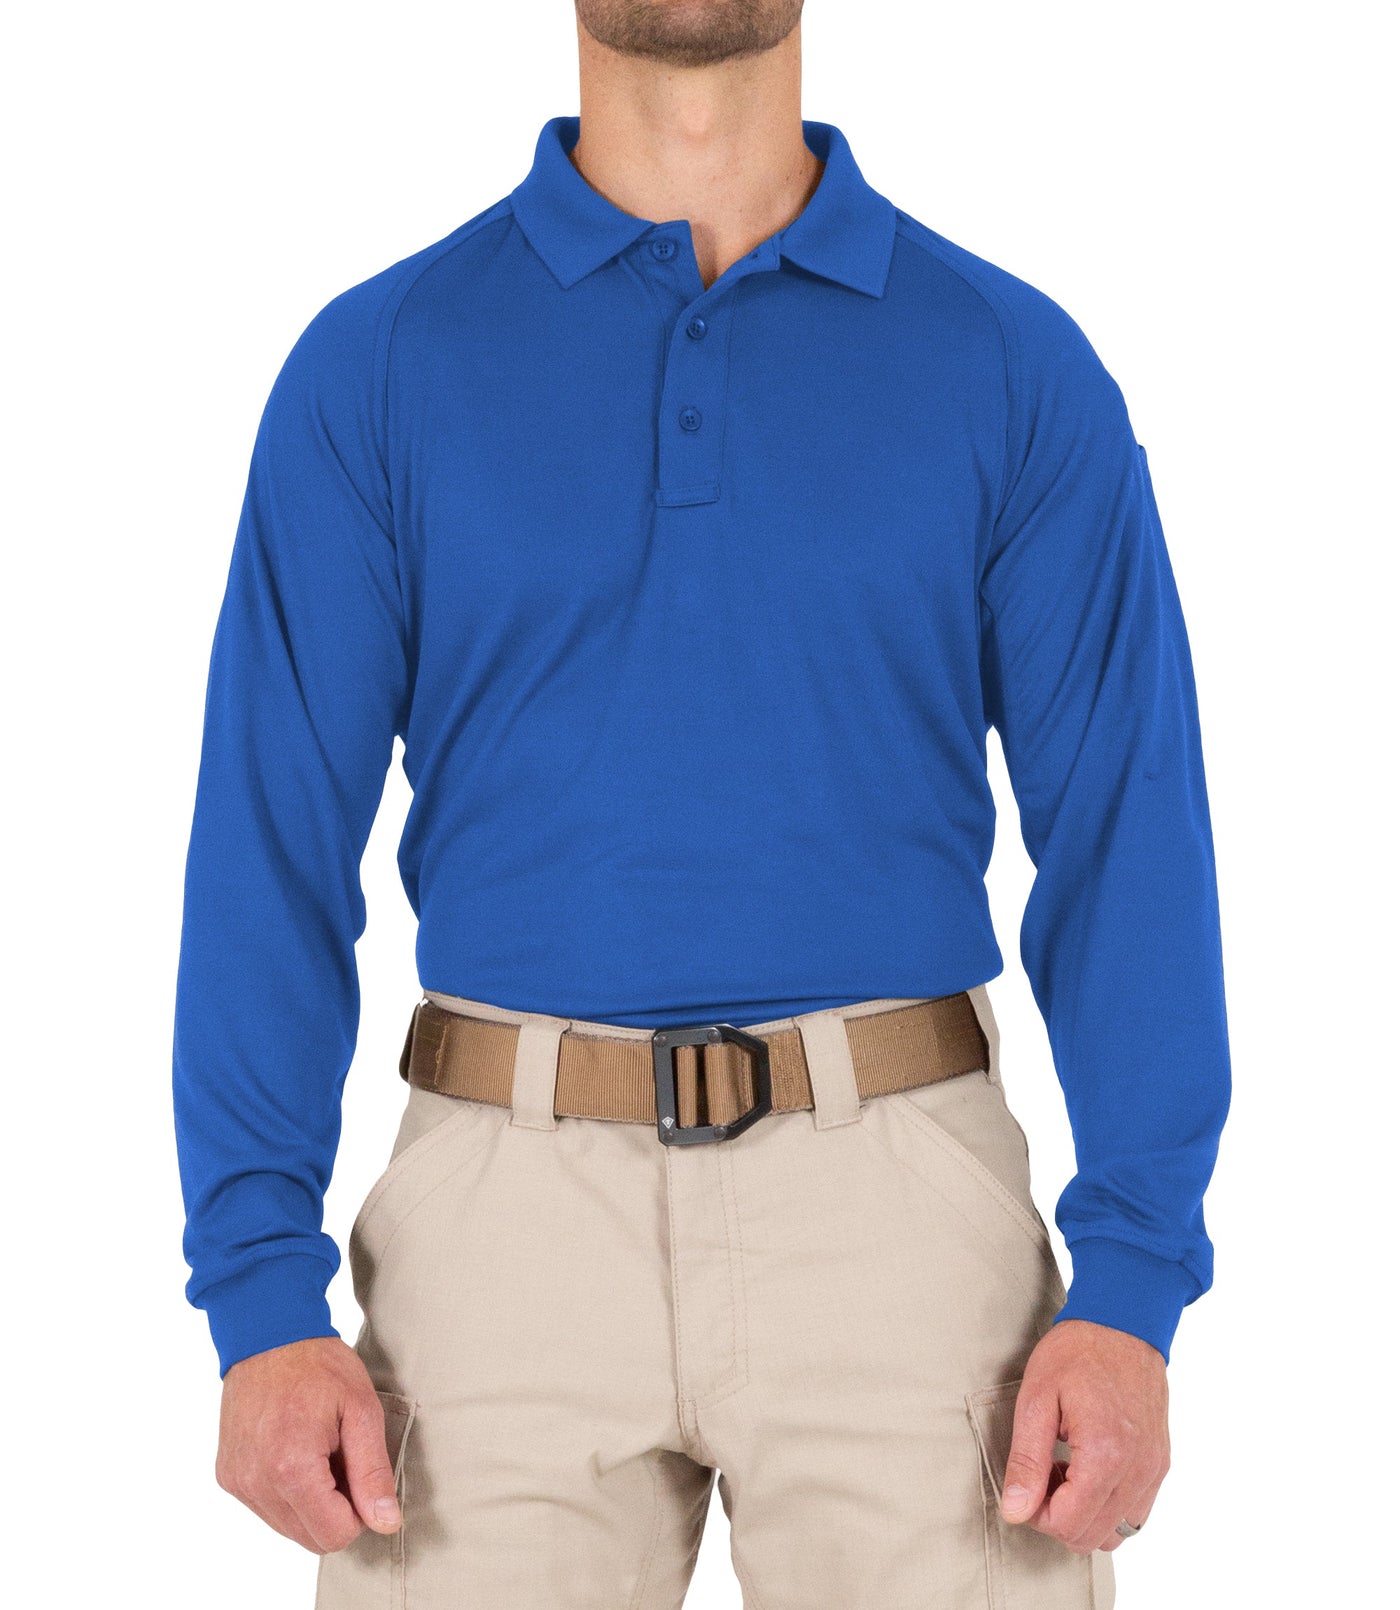 Buy Men's Performance Long Sleeve Top, Blue